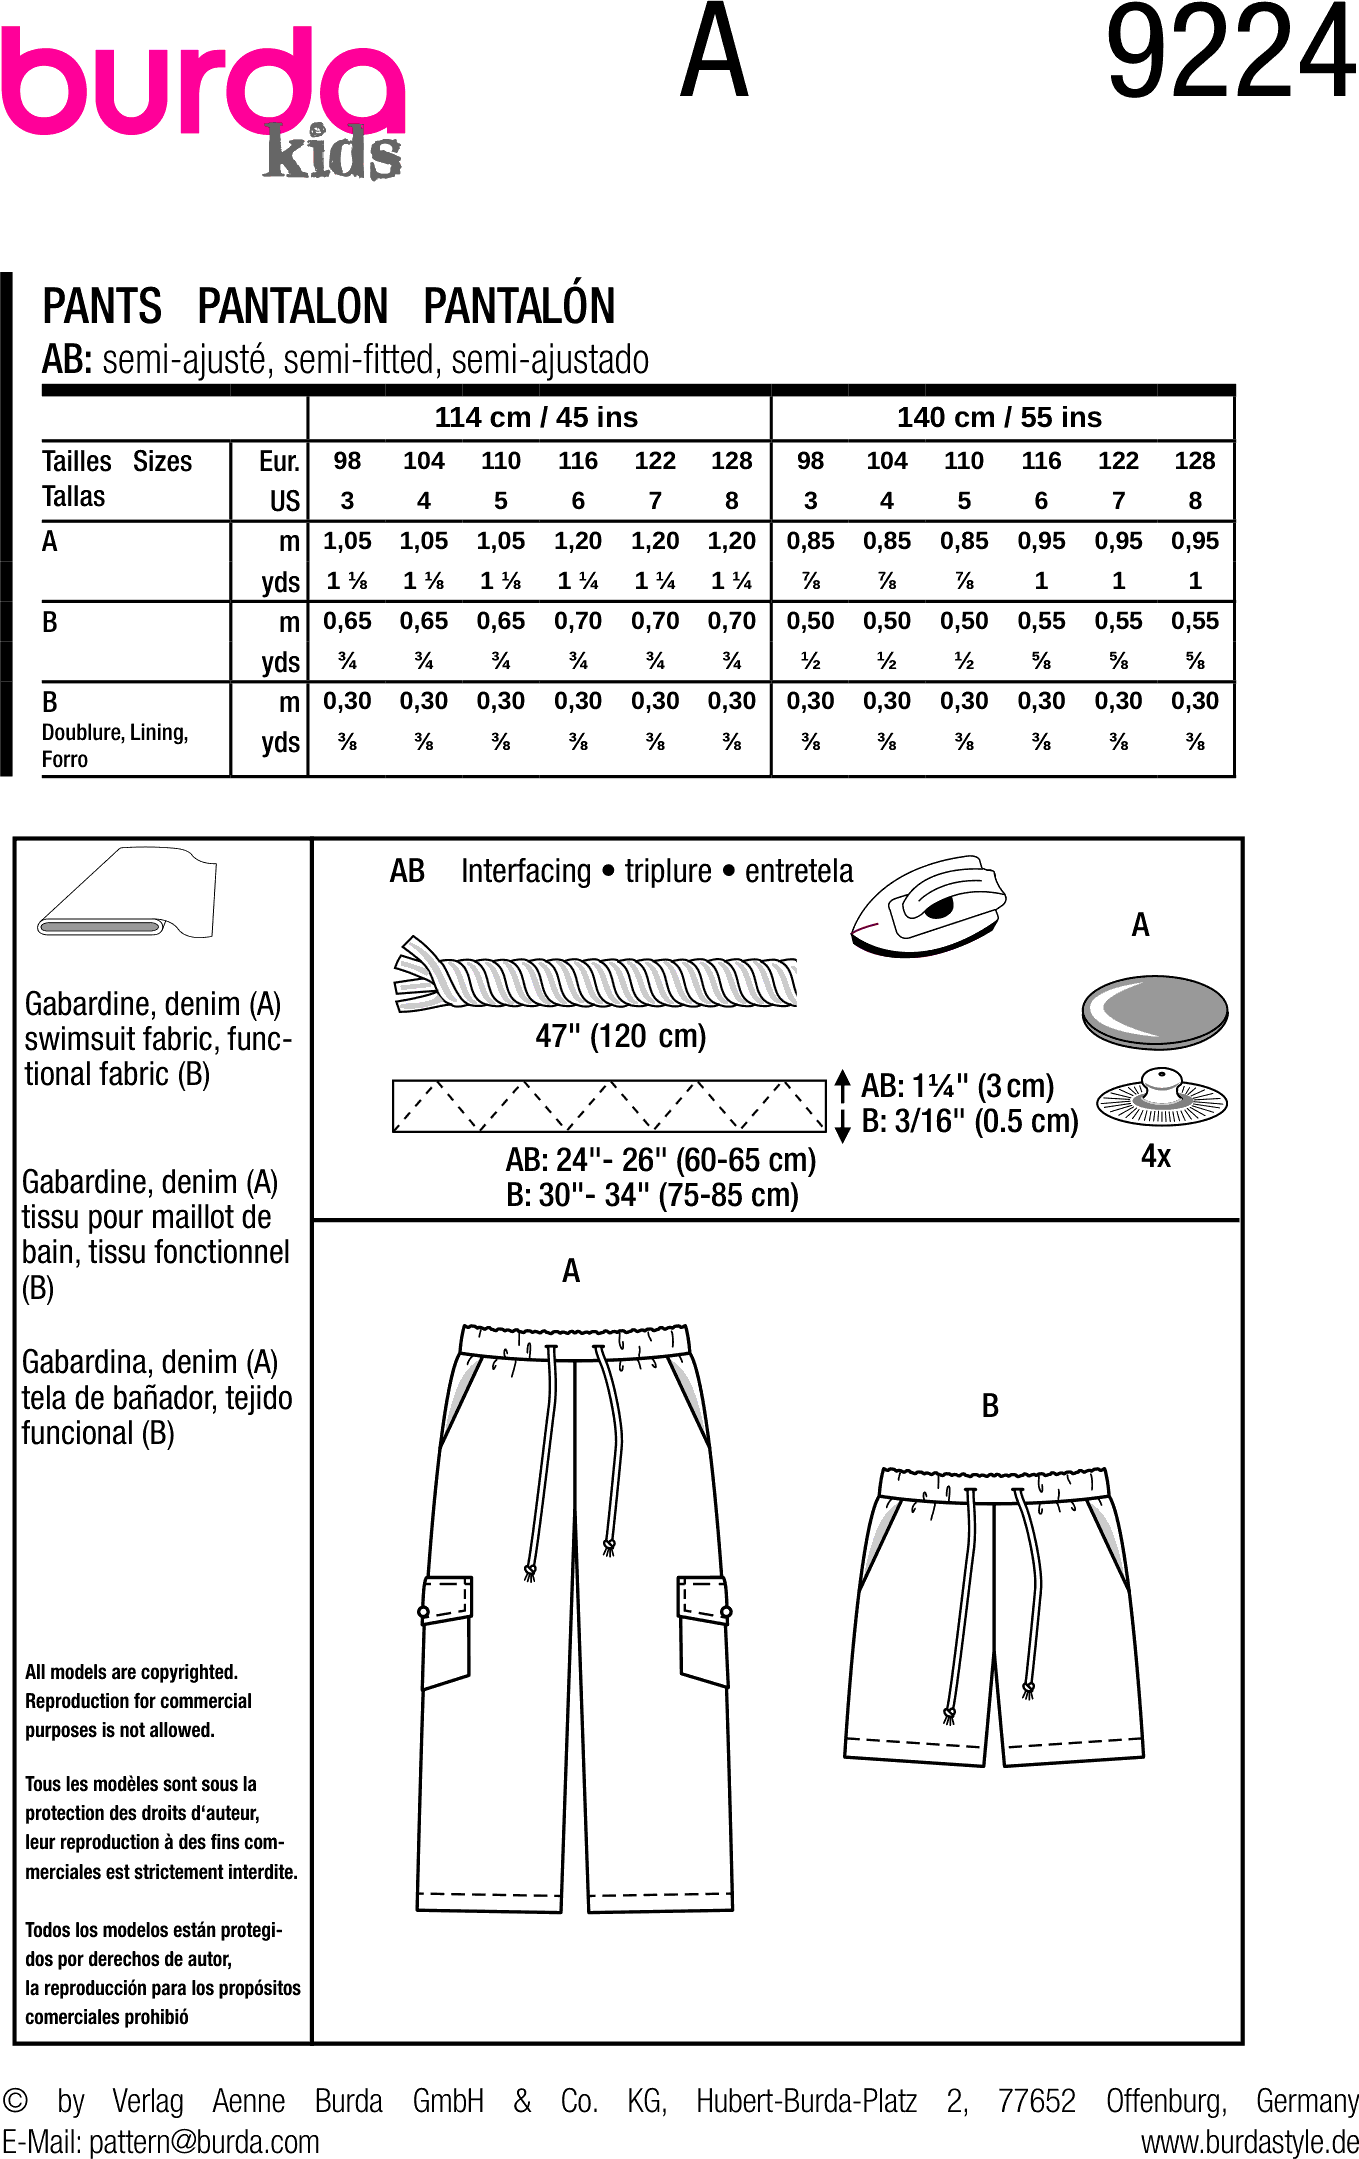 Burda Style Pattern 9224 Childrens Pants B9224 Fabric Quantity Requirements From Patternsandplains.com